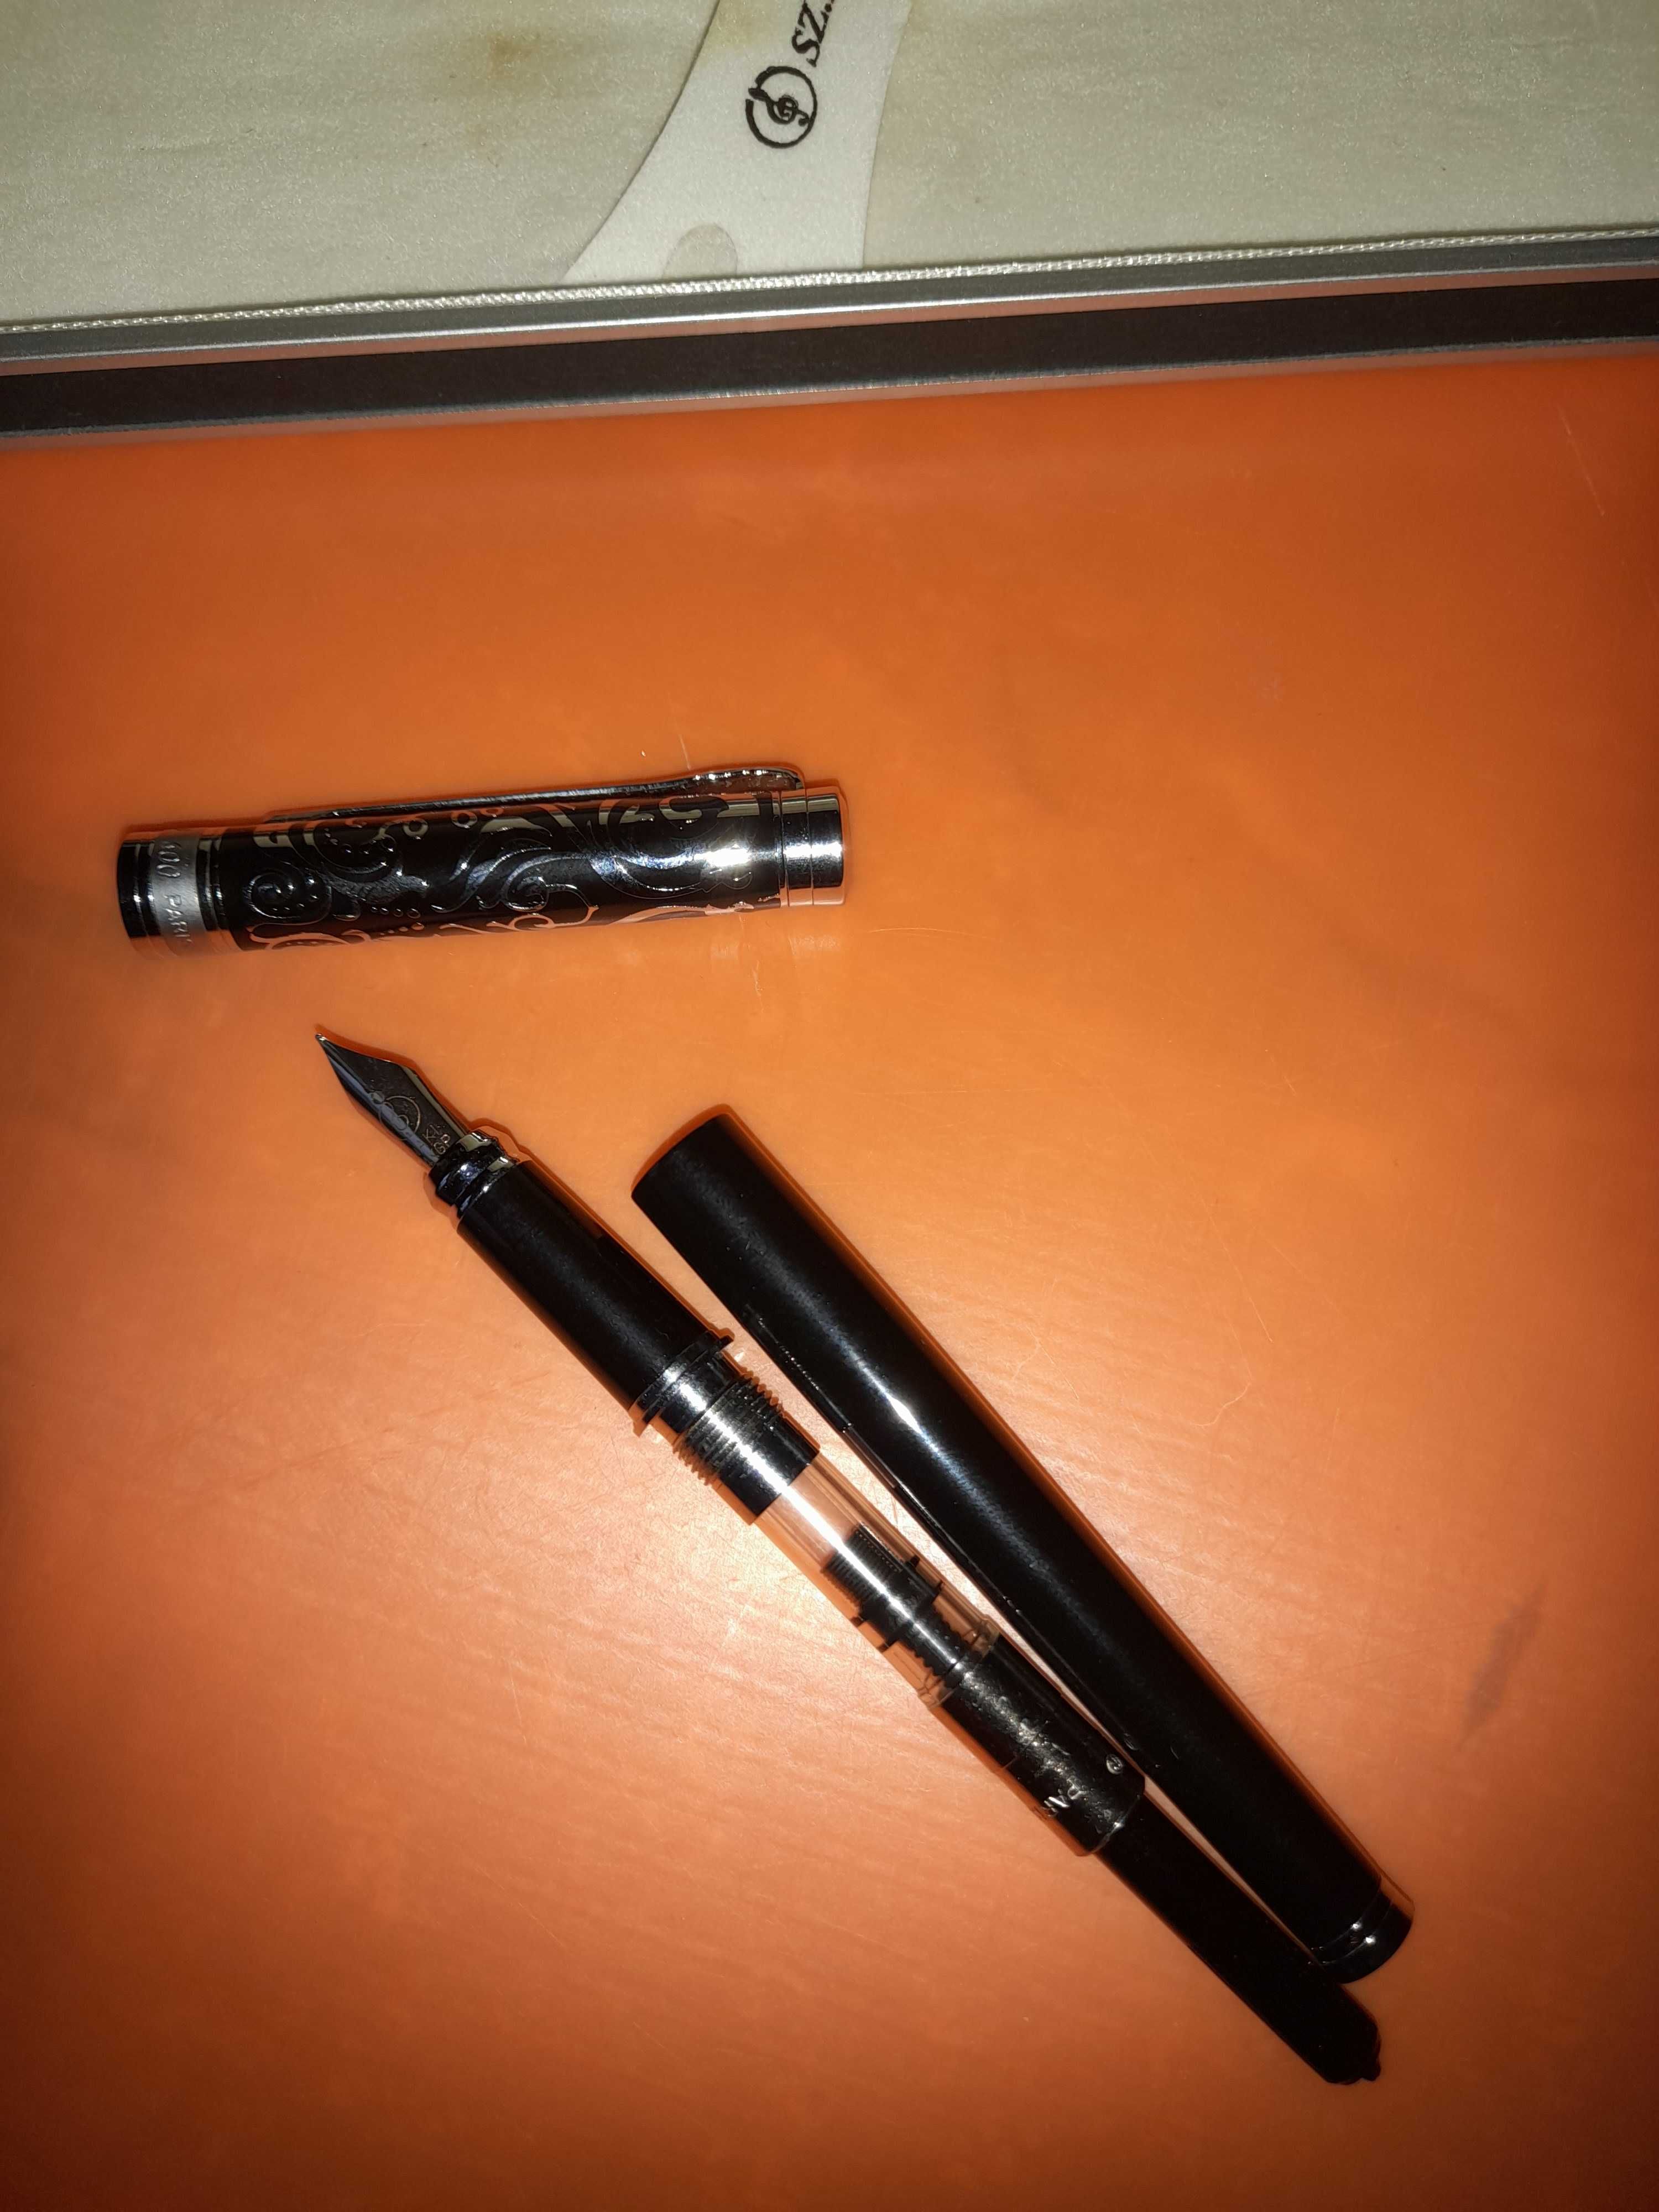 Ручка пір`єва SZ.LEQI ®Paris нова